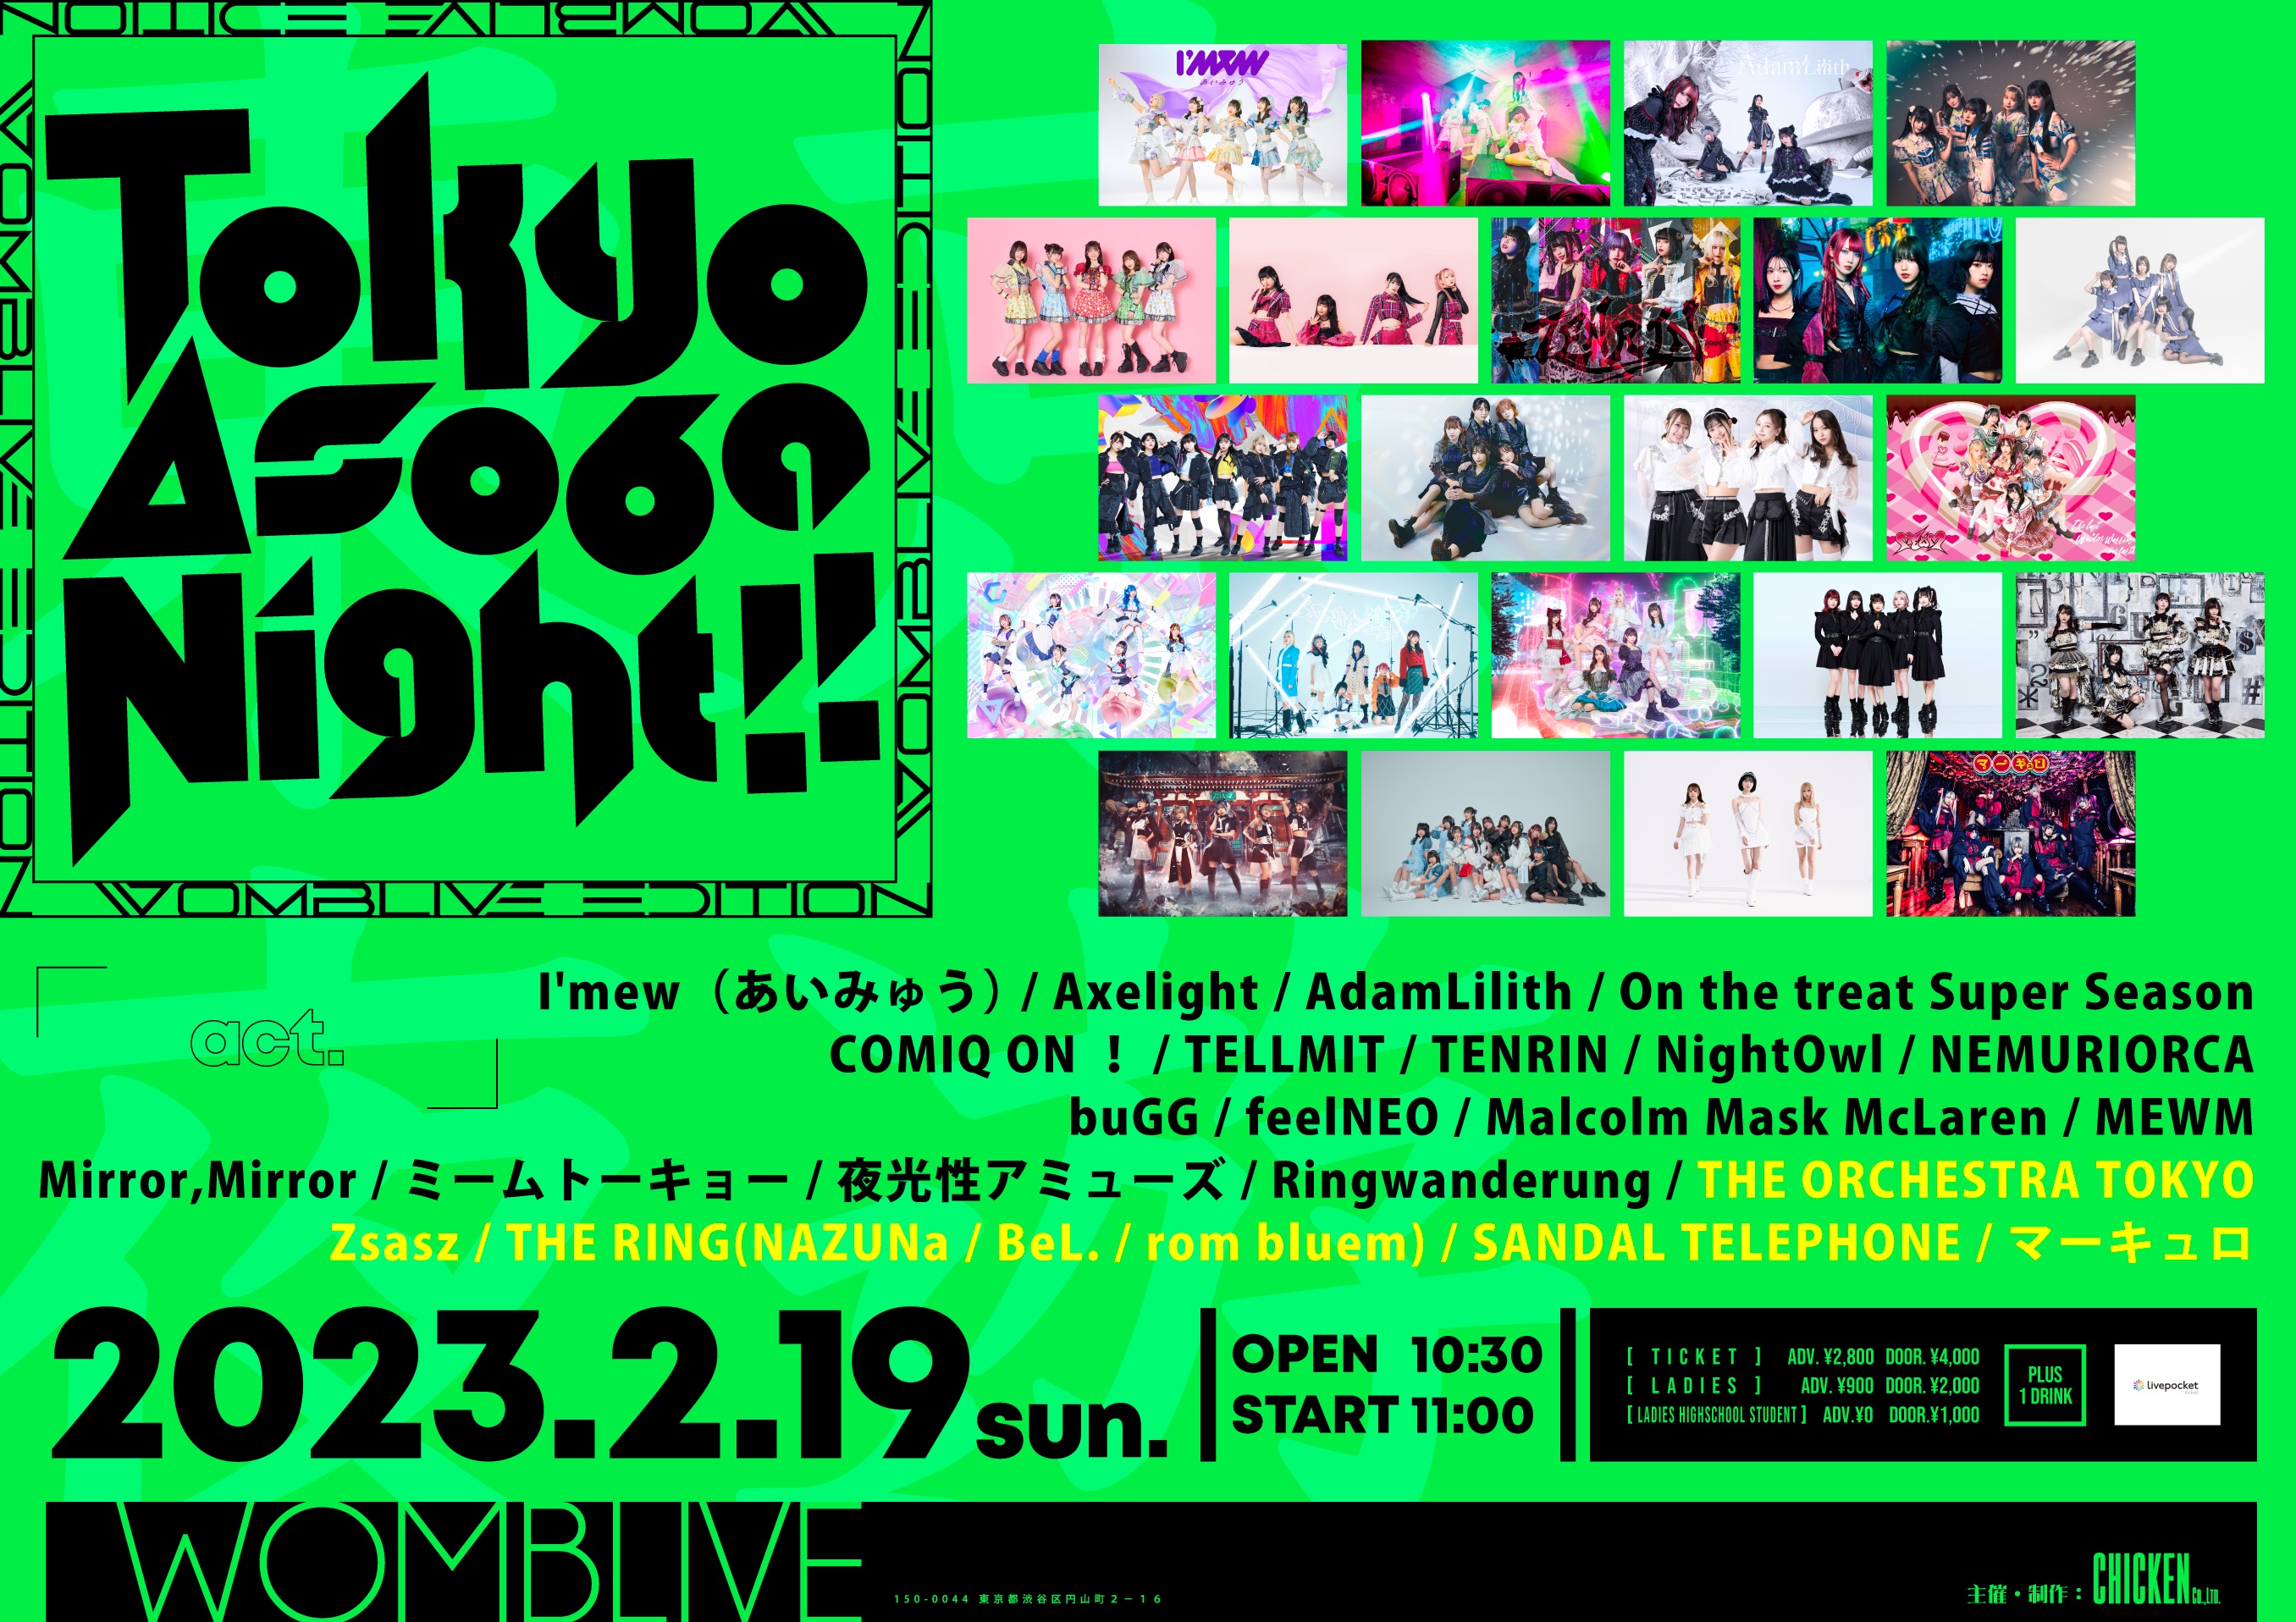 「 Tokyo Asoba Night!! 」 - WOMBLIVE Edition -